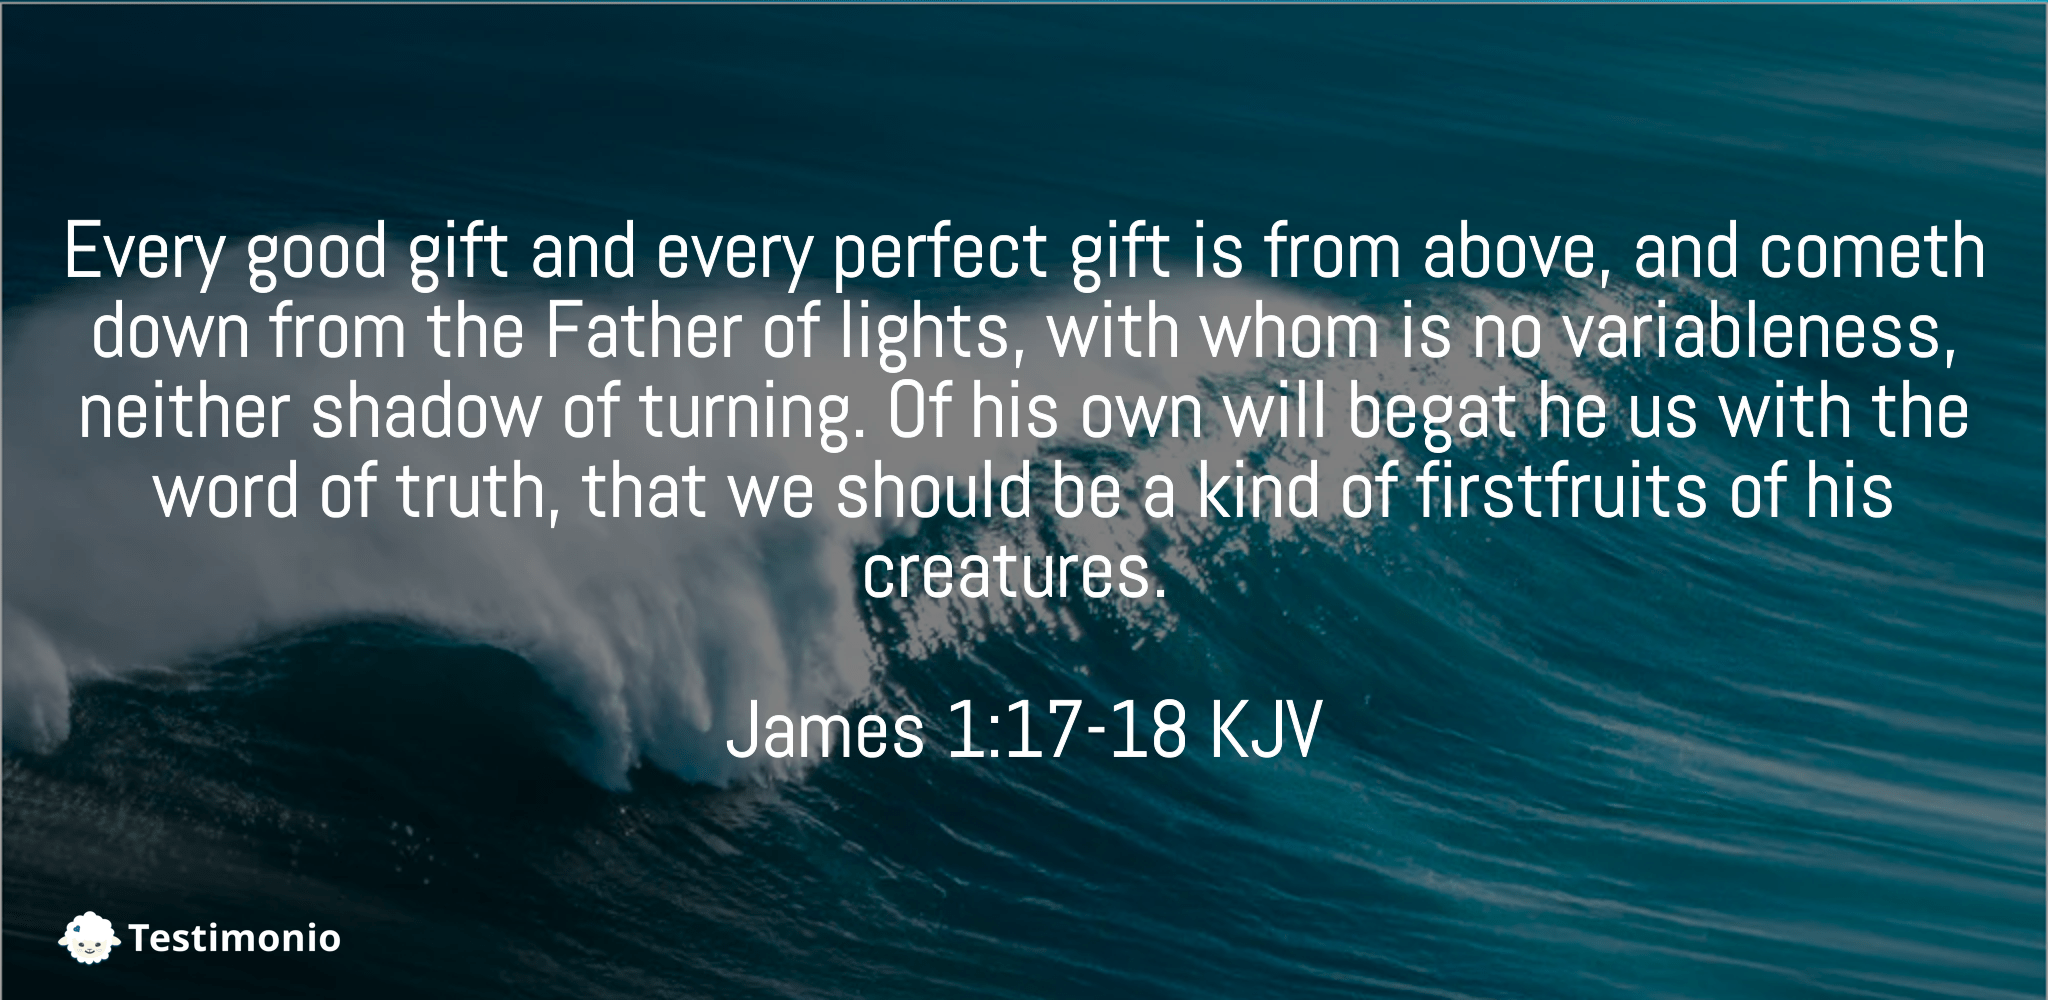 James 1:17-18